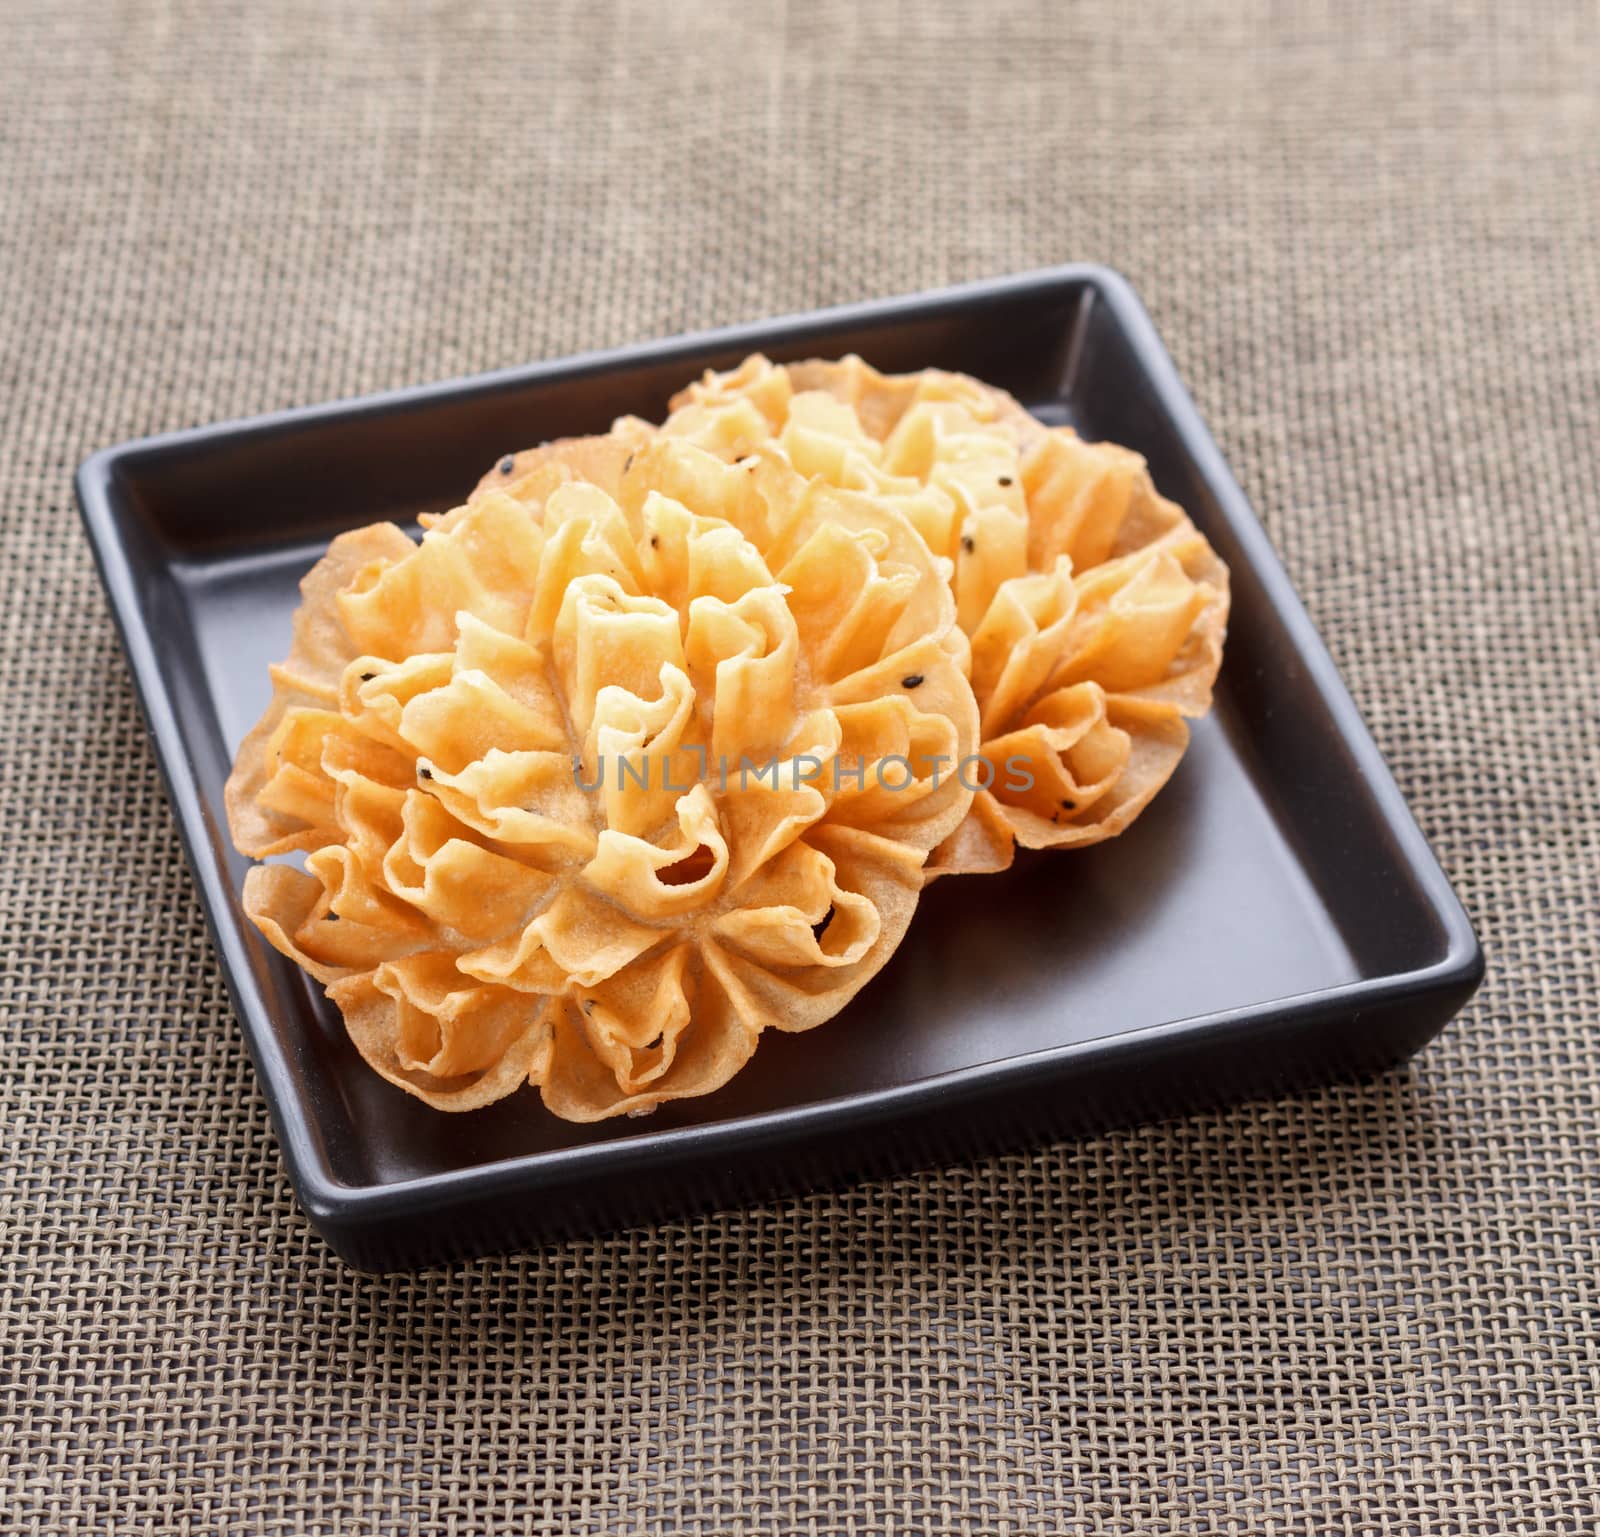 Crispy Lotus Blossom Cookie - Thai dessert by supersaiyan